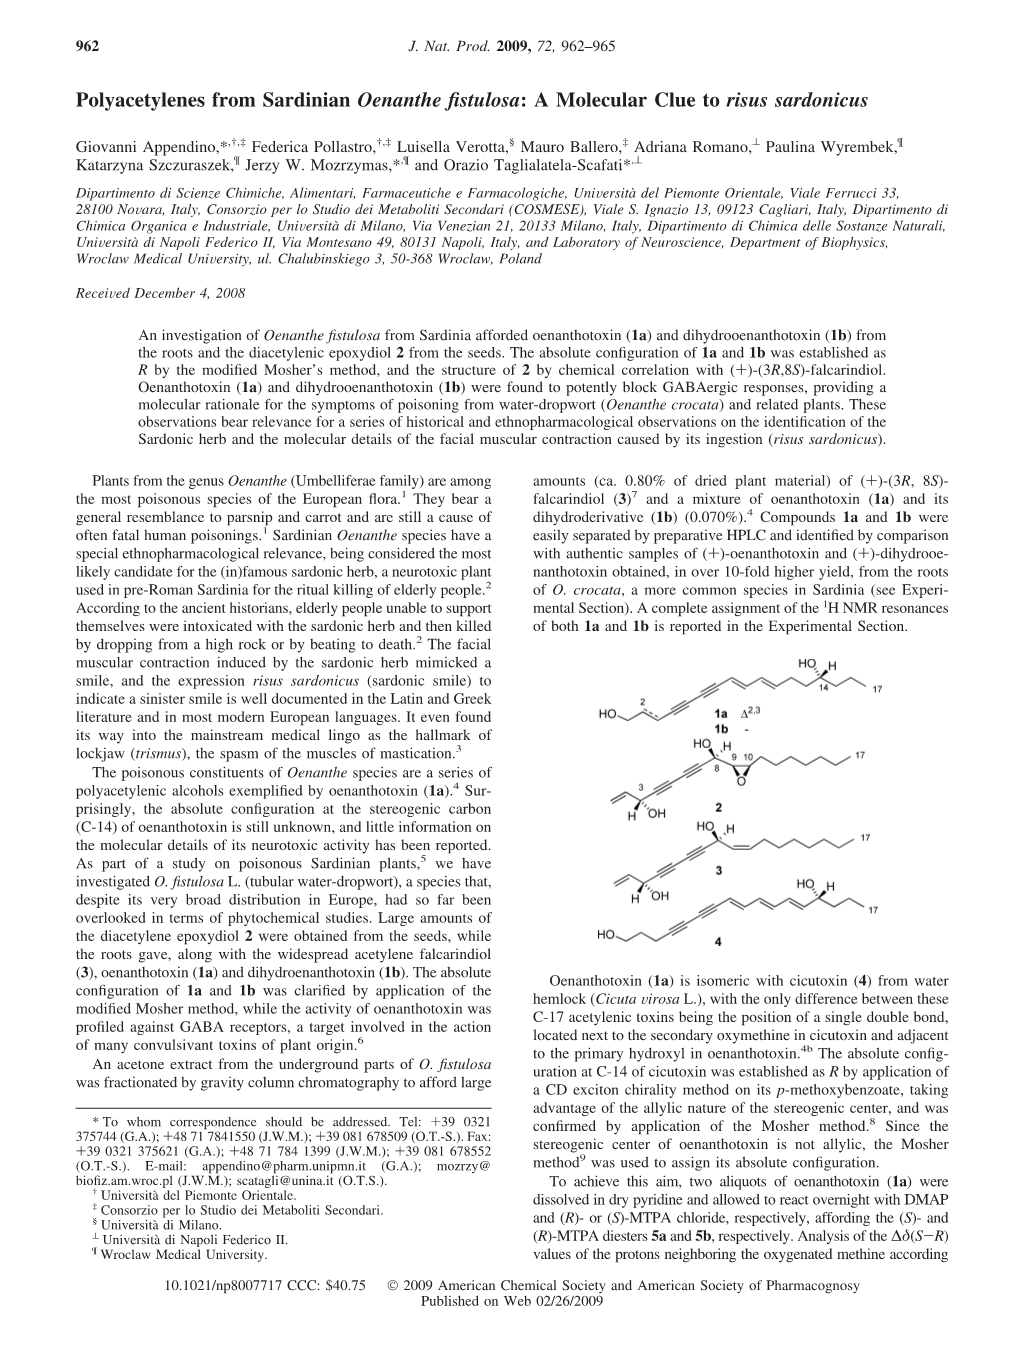 Polyacetylenes from Sardinian Oenanthe Fistulosa: a Molecular